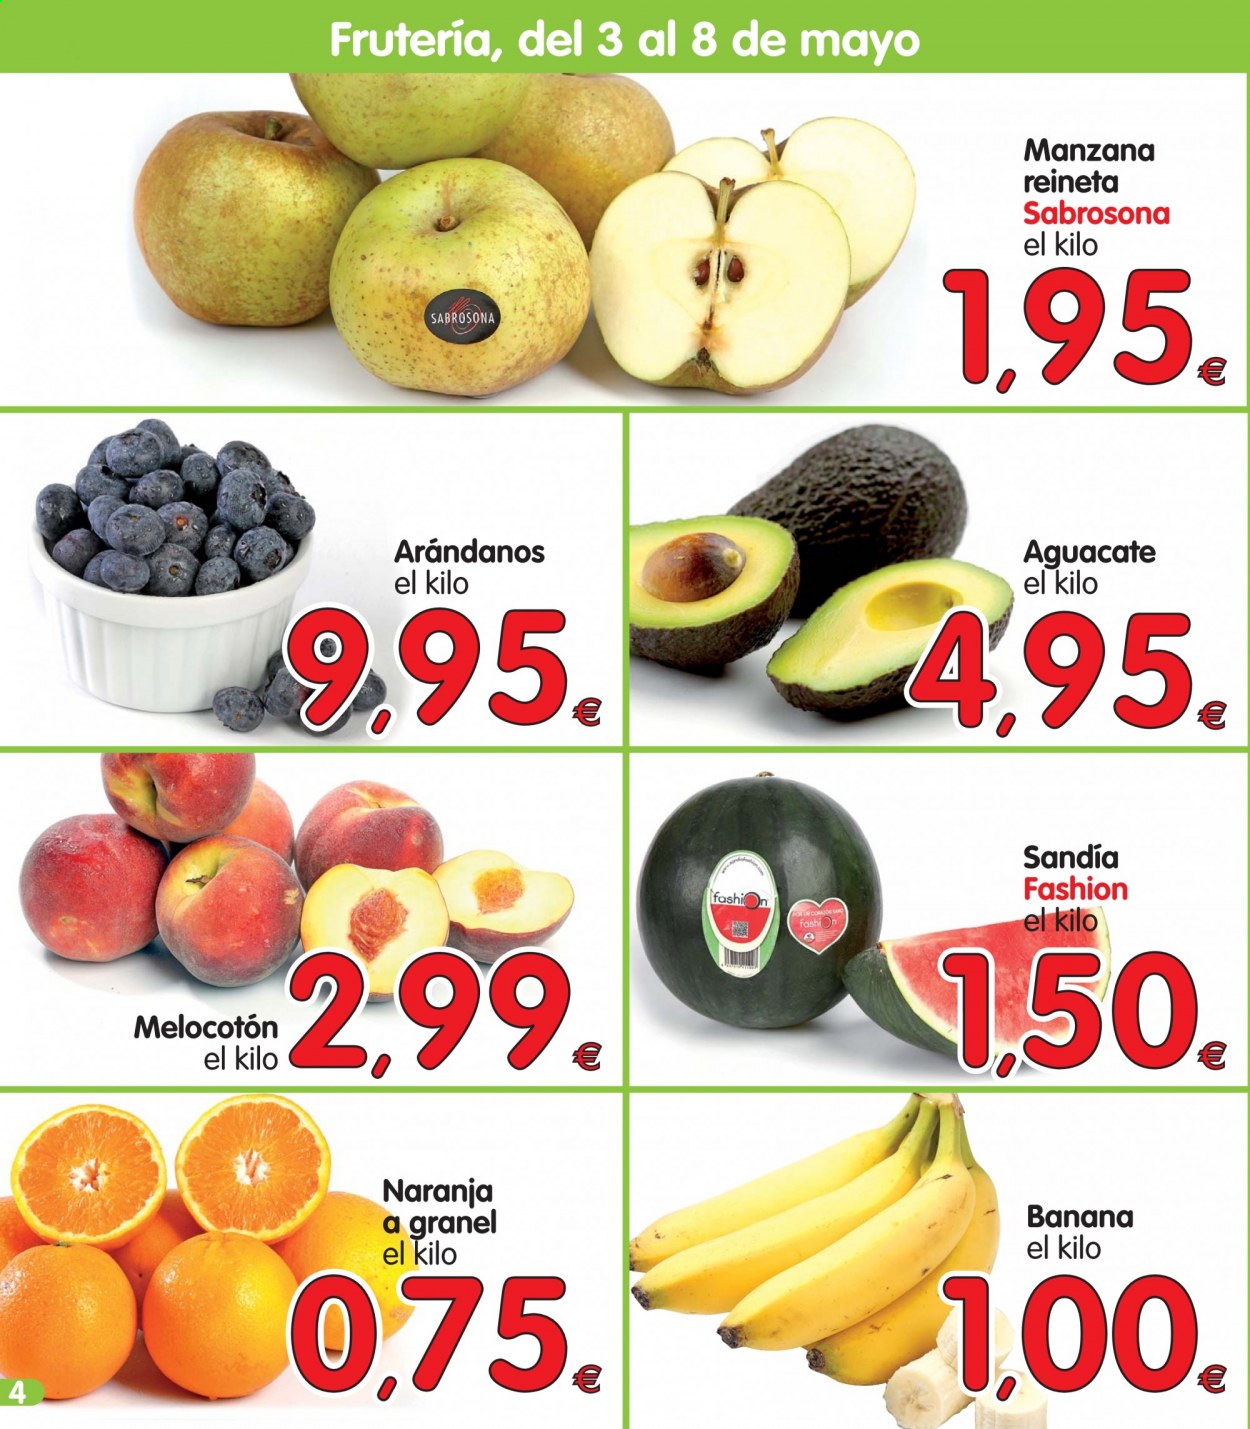 thumbnail - Folleto actual Alimerka - 03/05/21 - 08/05/21 - Ventas - banana, aguacate, arándano, manzanas, melocotón, naranja. Página 4.